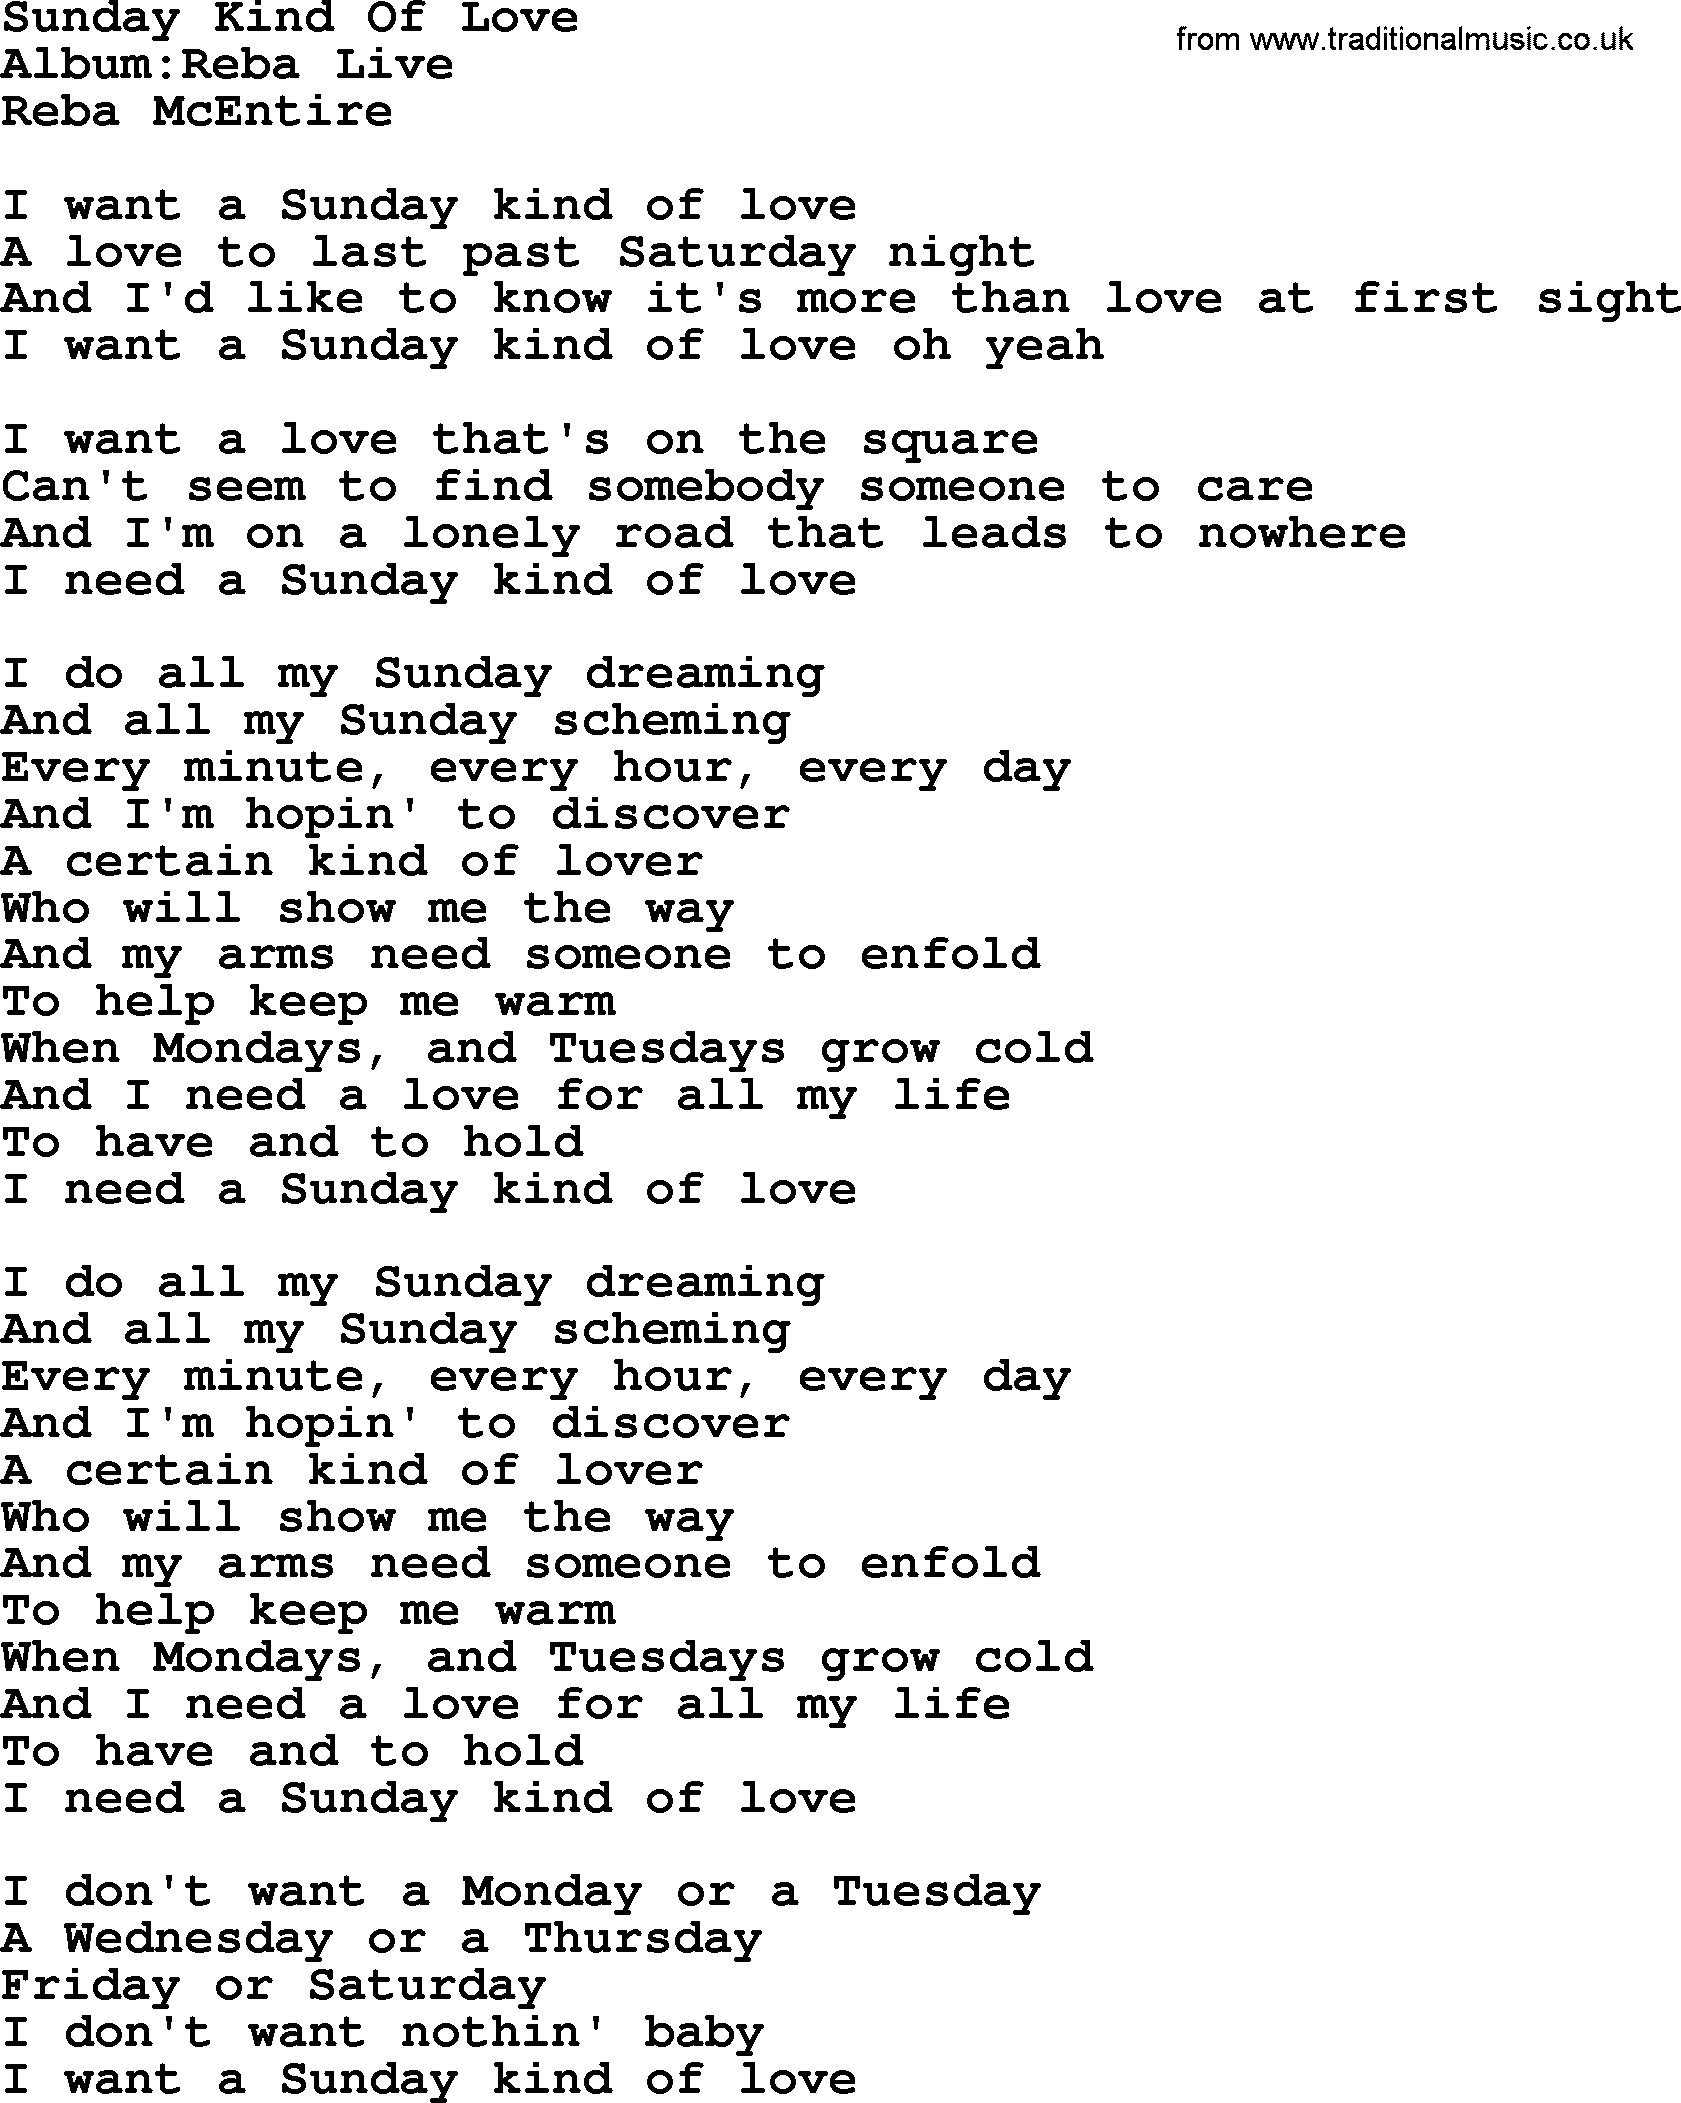 Reba McEntire song: Sunday Kind Of Love lyrics